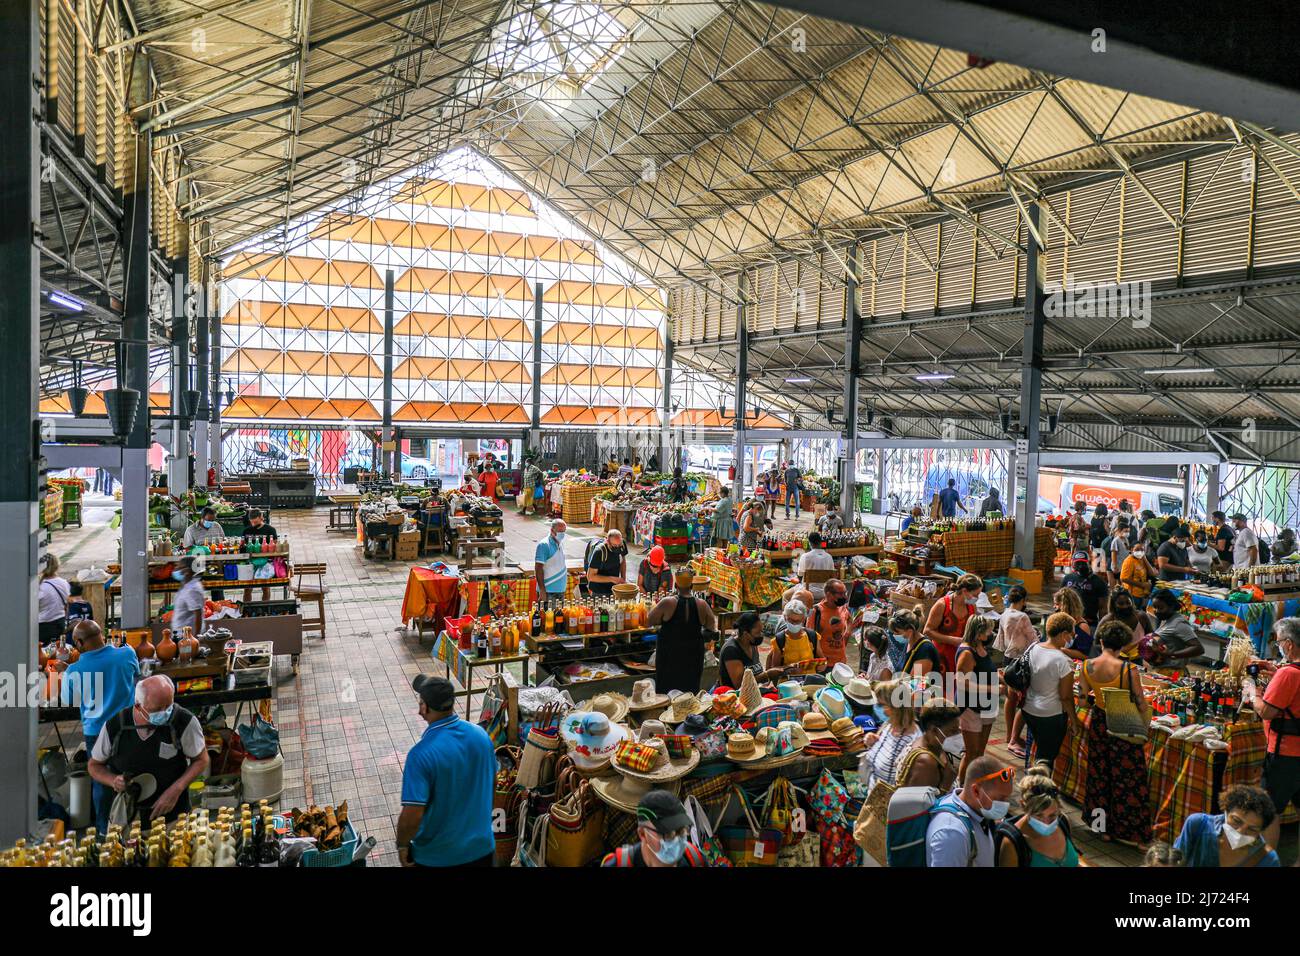 Fort-de-France market - Martinique, French Antilles Stock Photo